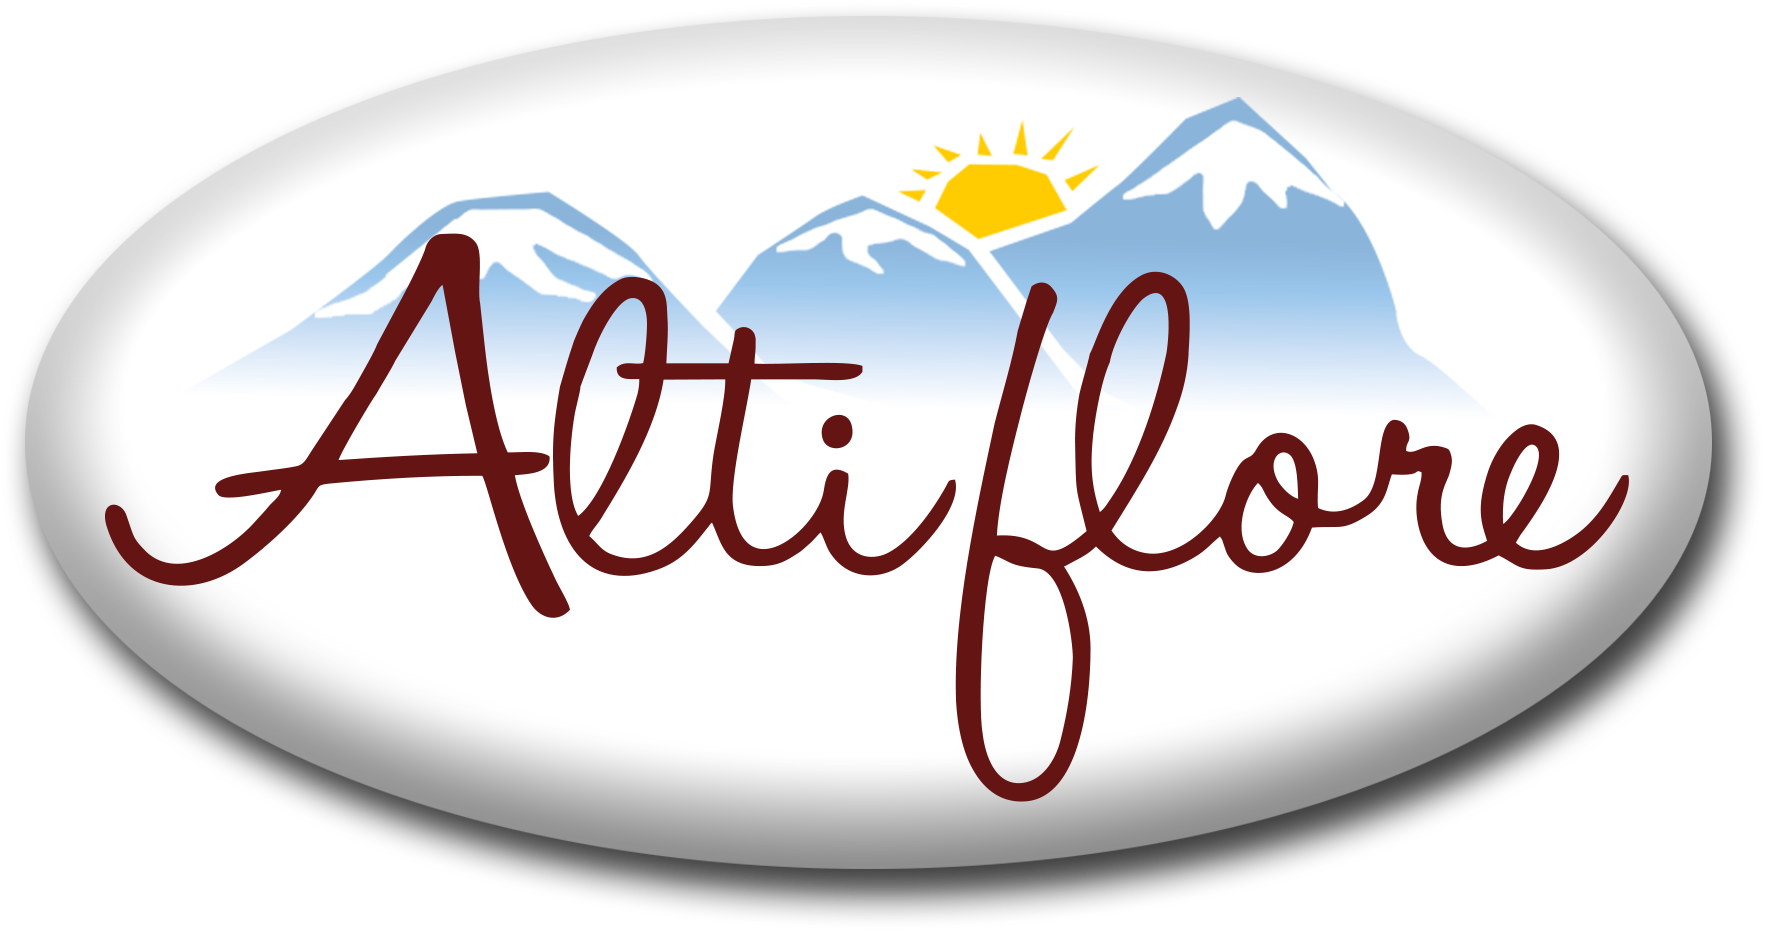 Altiflore - glaces artisanales